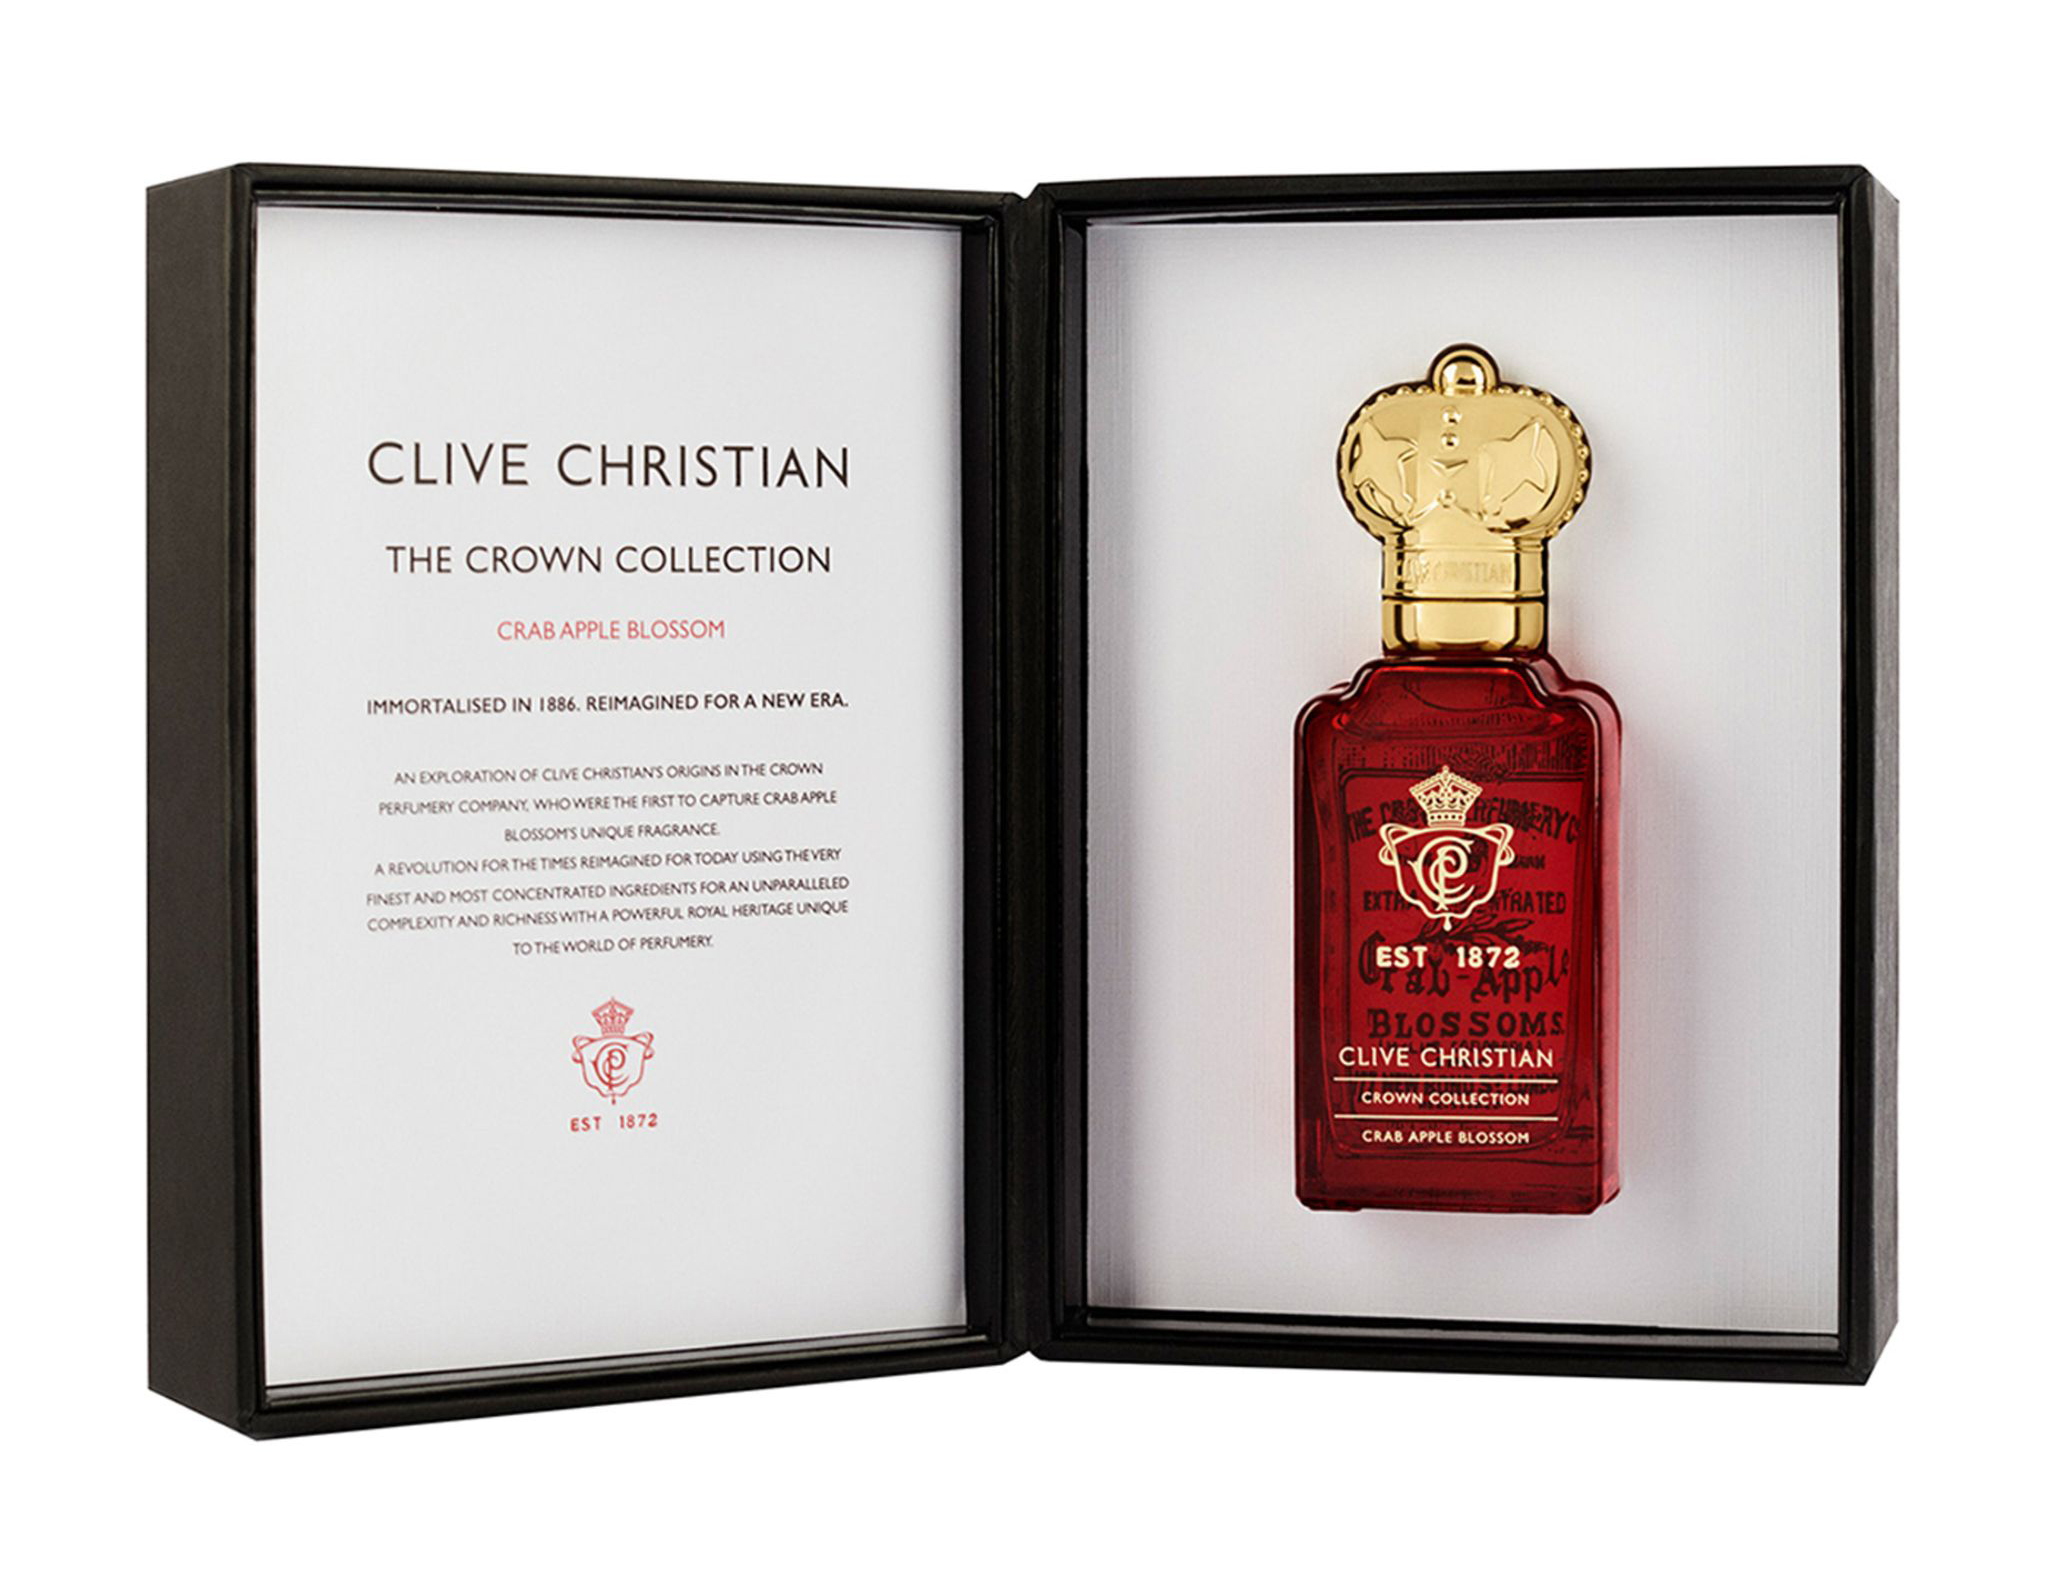 Crown collection. Clive Christian est 1872 красные Crown collection. Клив Кристиан est 1872. Clive Christian Citrus Floral. Клив Кристиан est 1872 в красной коробке.